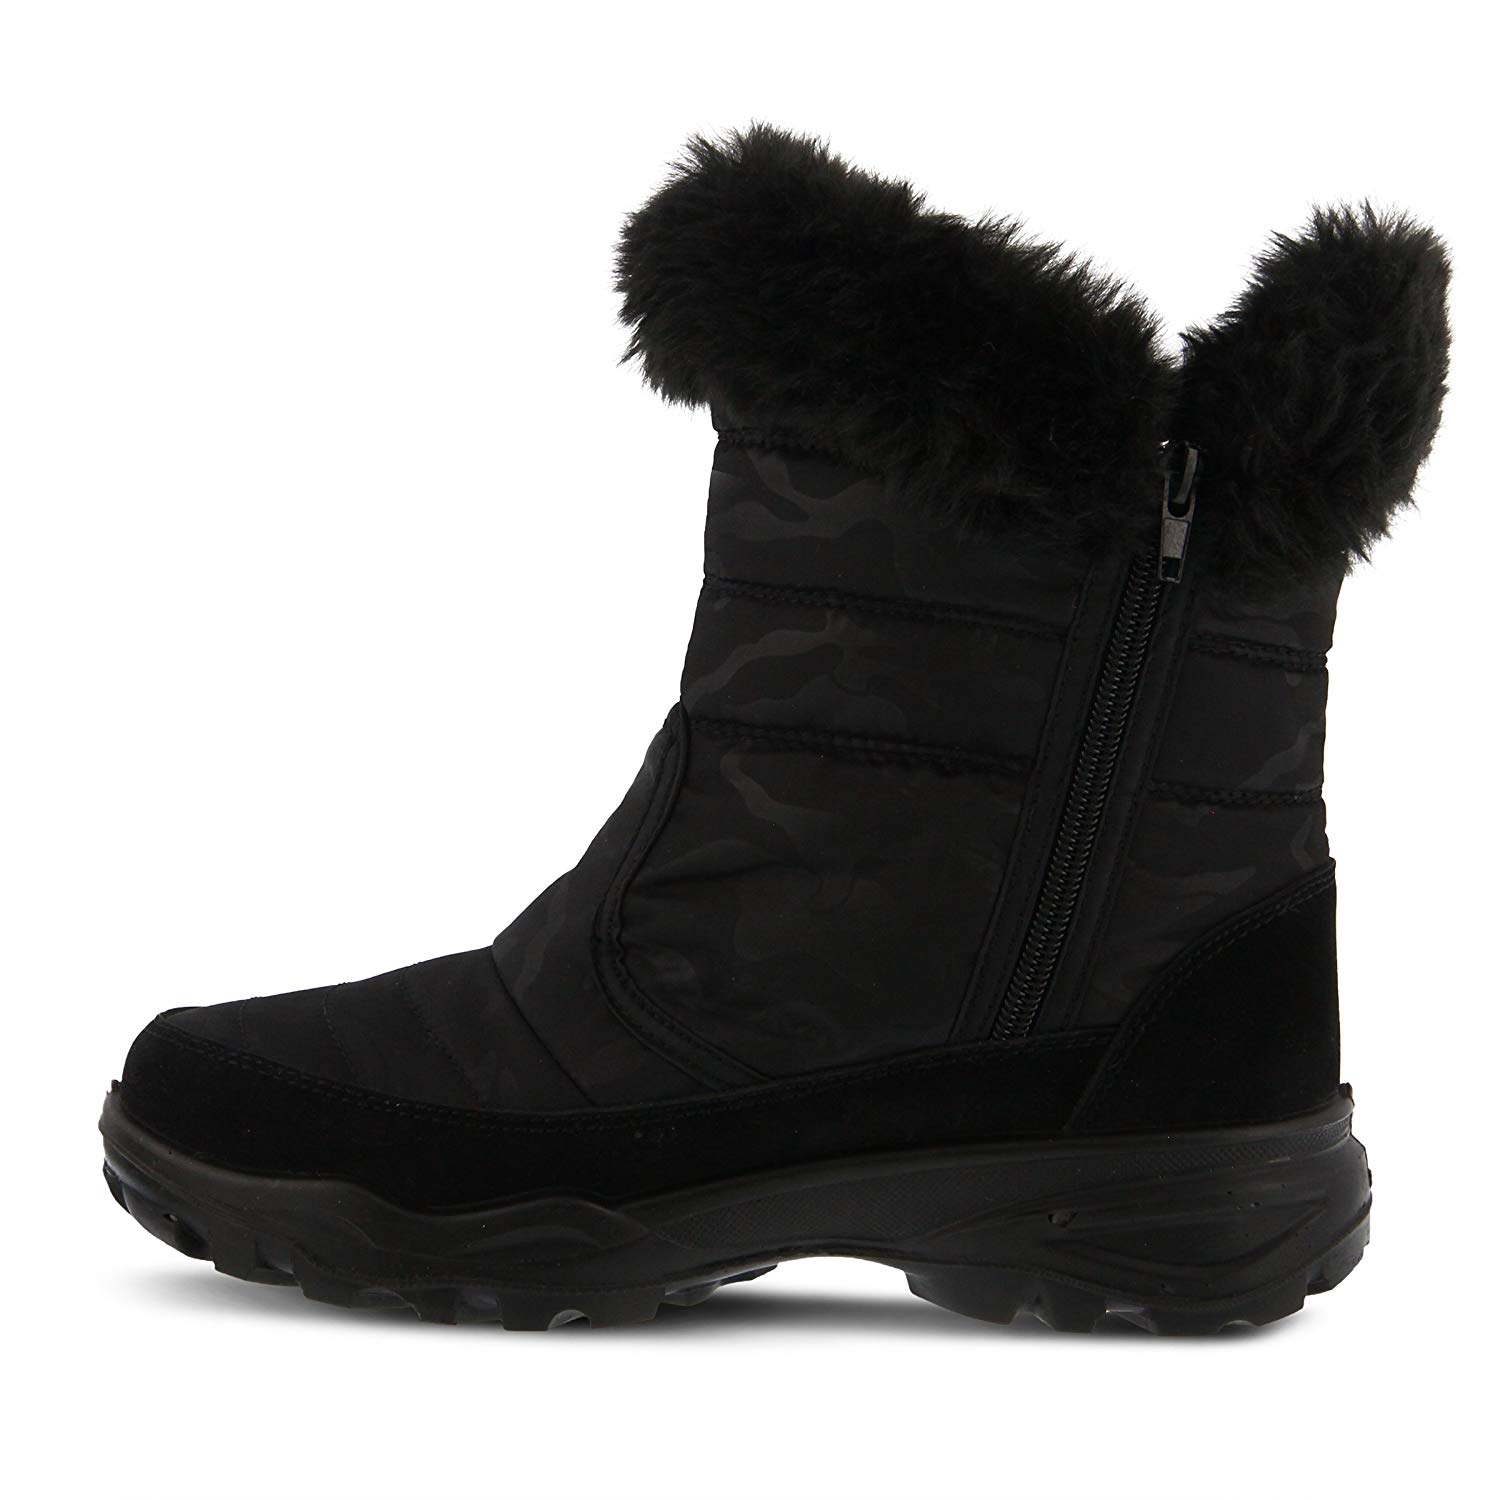 Flexus Womens Korine Black Boot -, Black, Size 9.0 vZBn | eBay